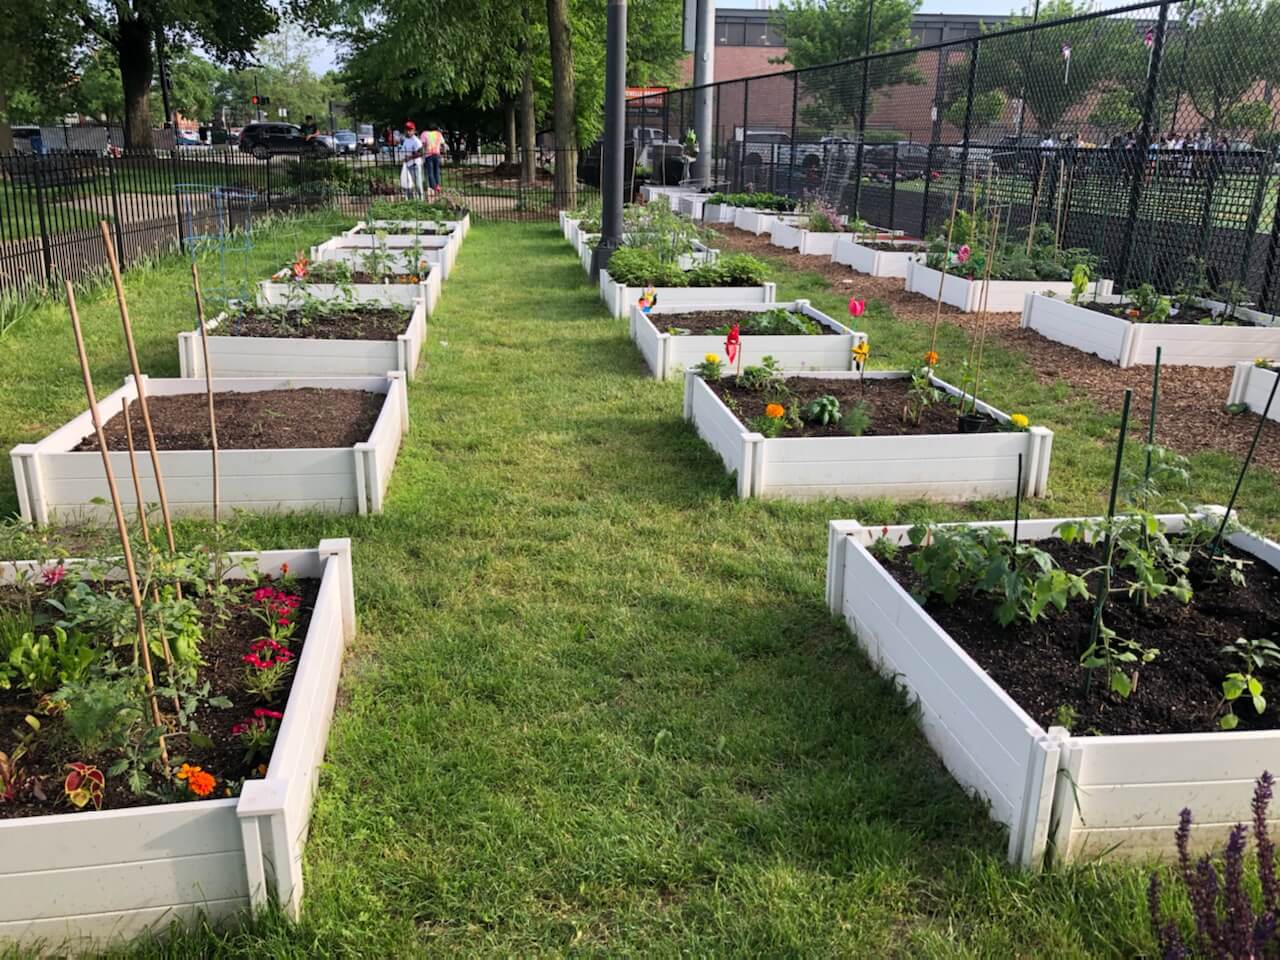 raised garden beds in Chicago's Loomis Street Park